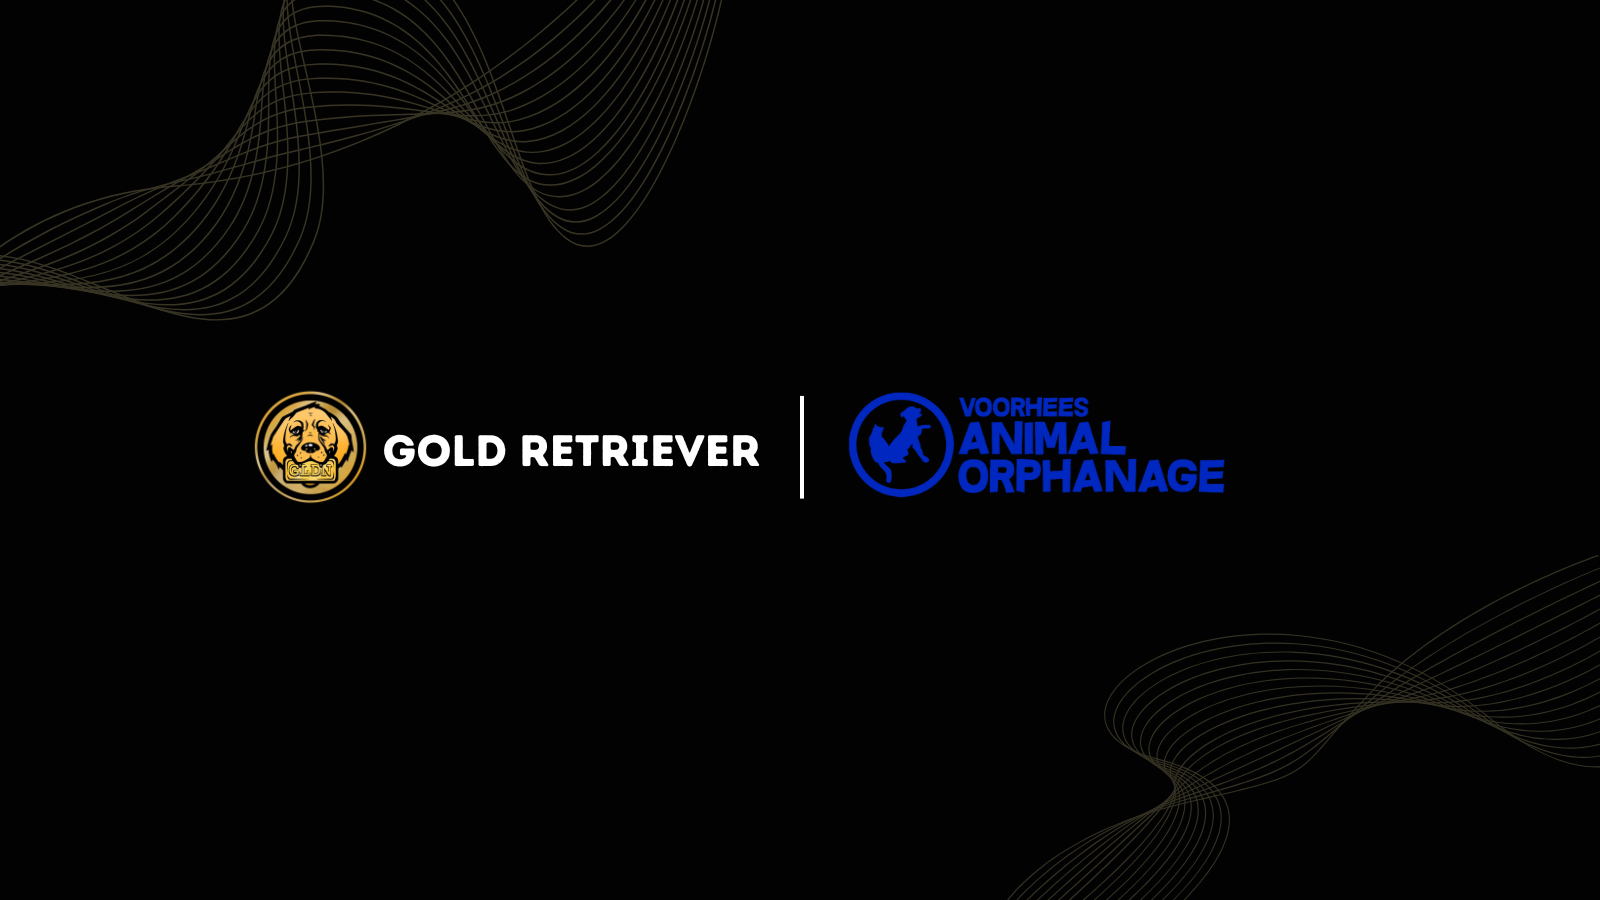 Gold Retriever LLC, Friday, November 4, 2022, Press release picture